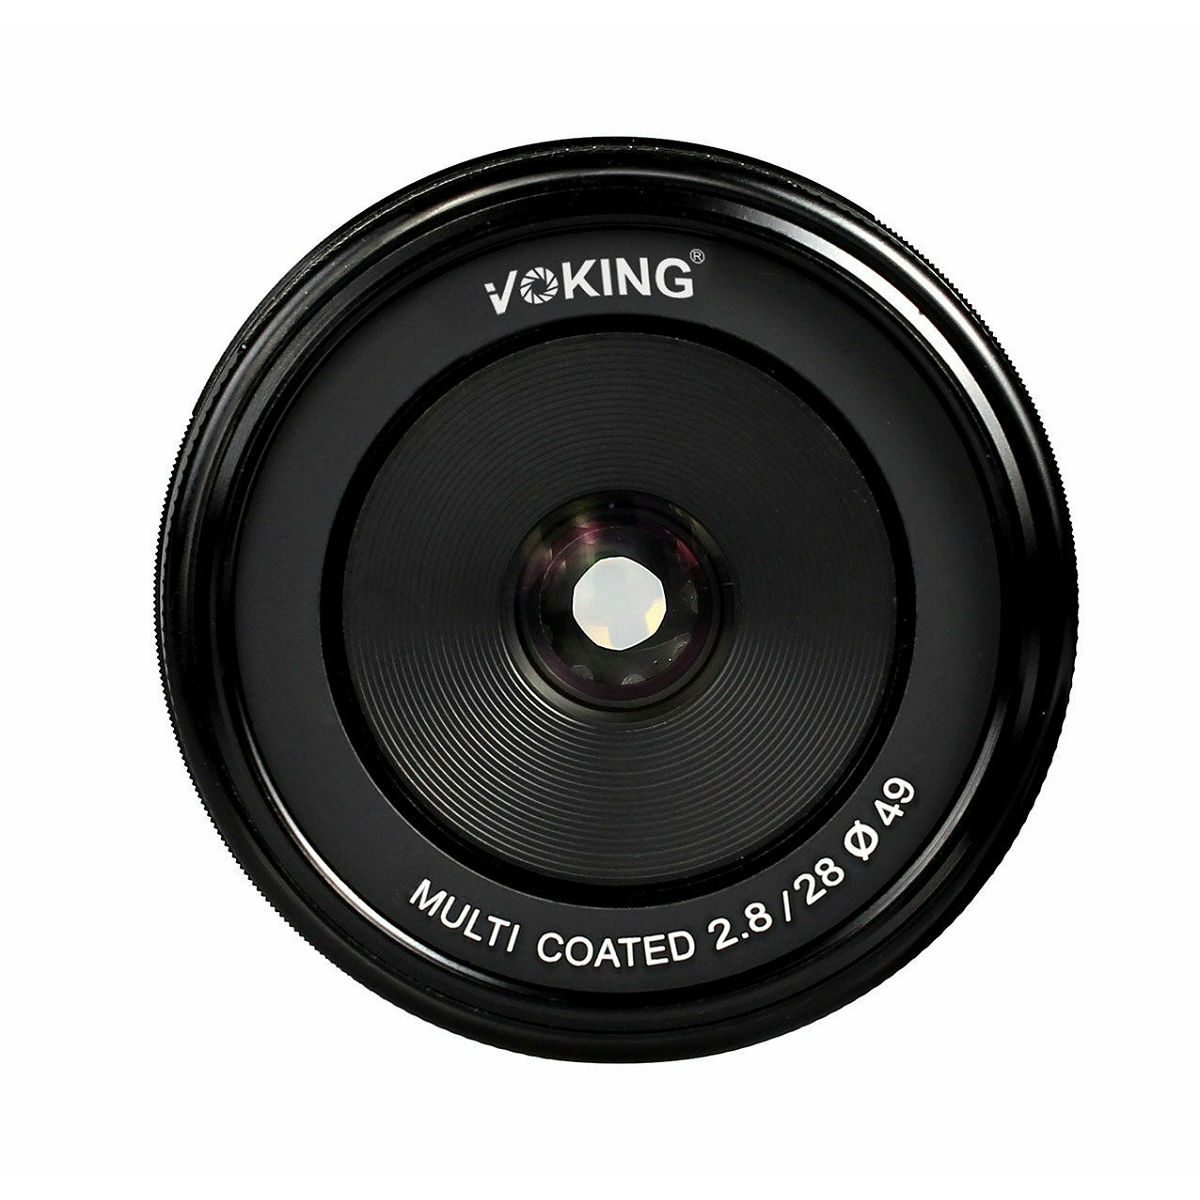 Voking 28mm F2.8 širokokutni objektiv za Sony E-Mount (VK28-2.8-S)